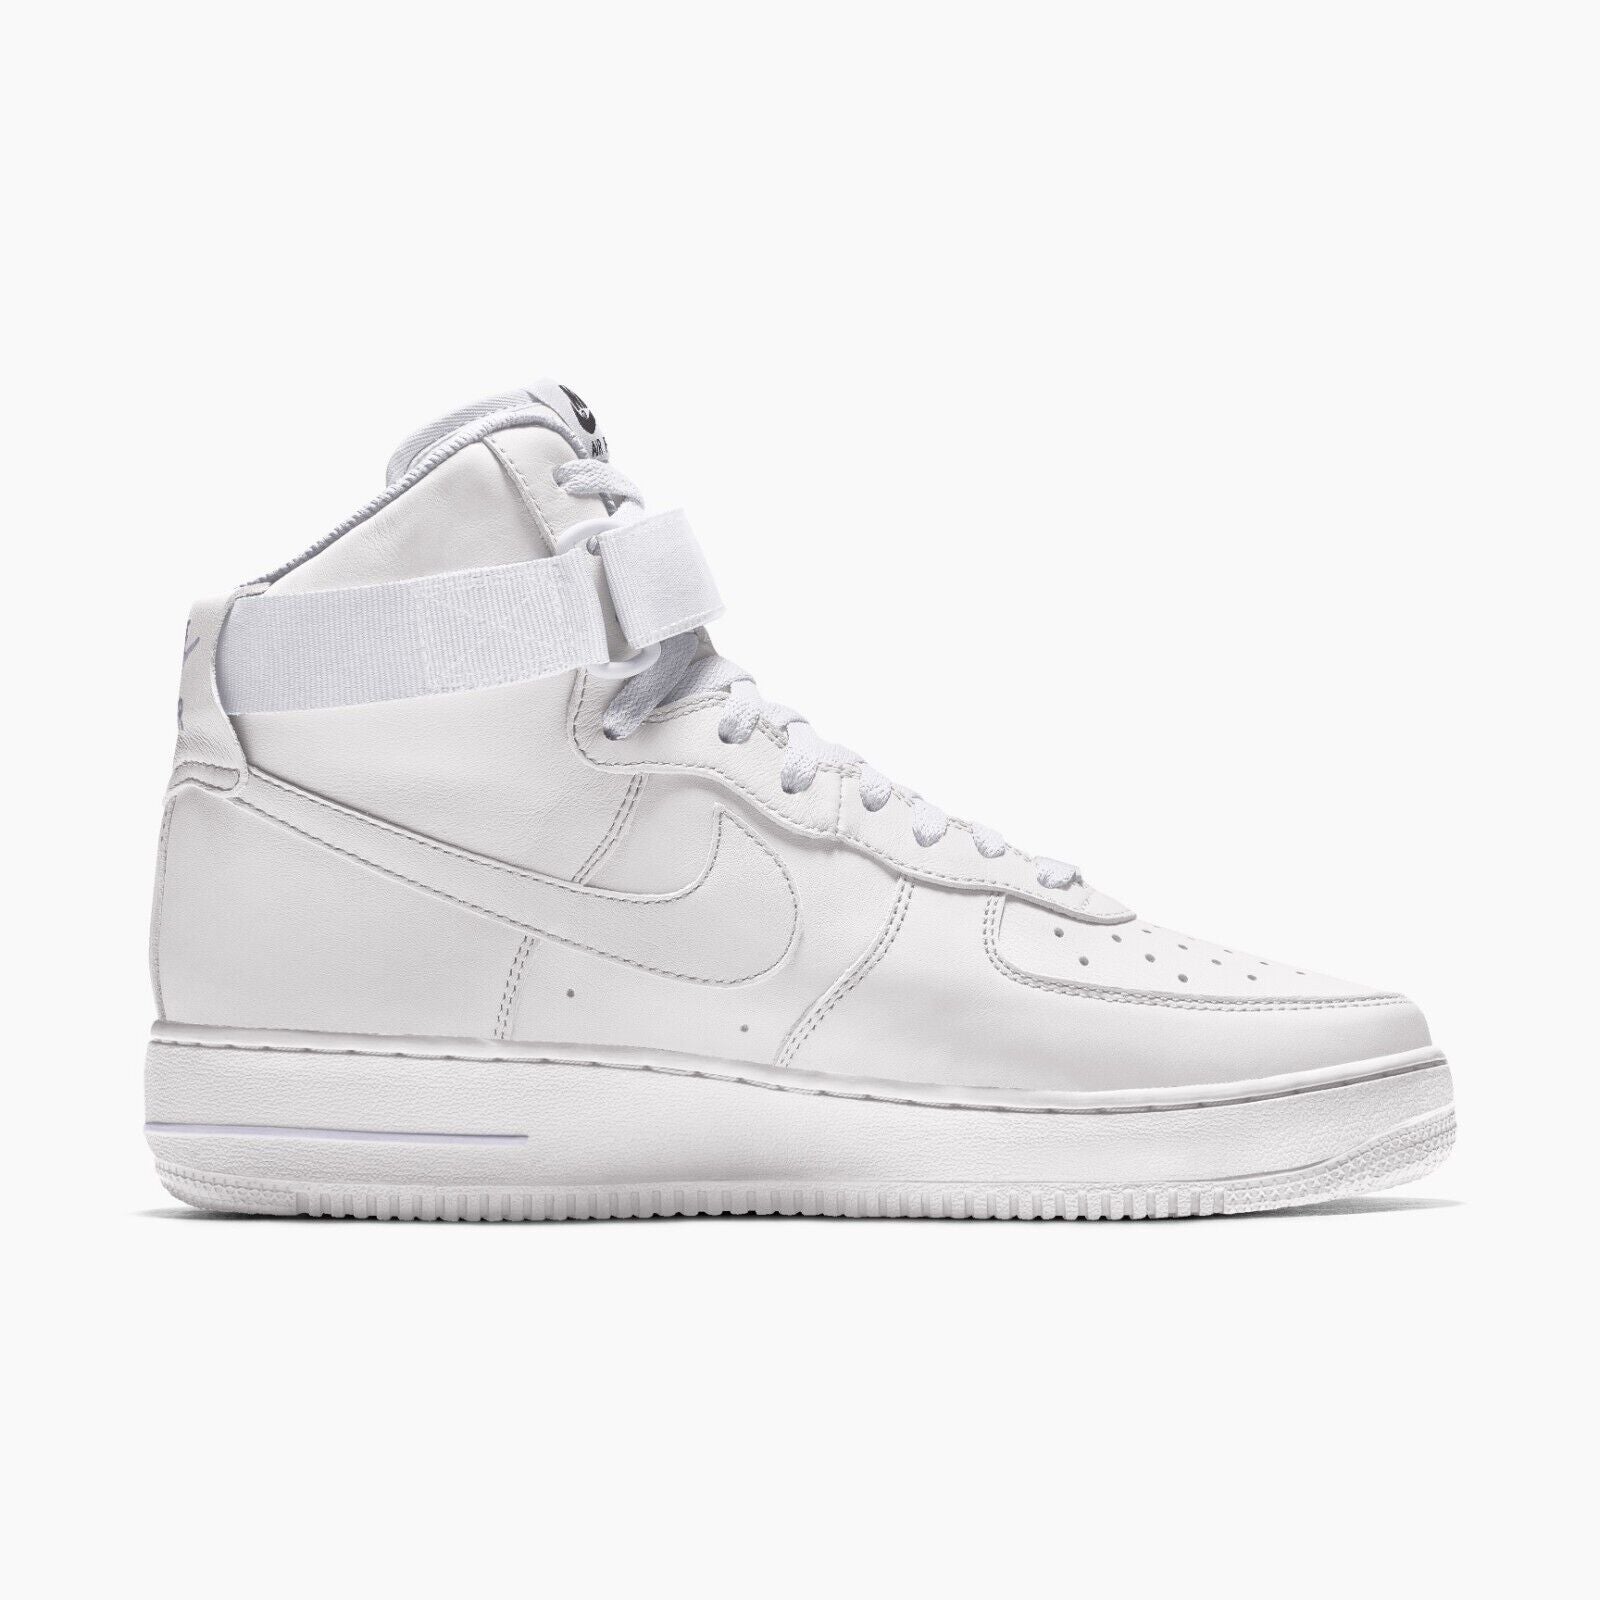 Nike Air Force 1 Hi sneakers in triple white